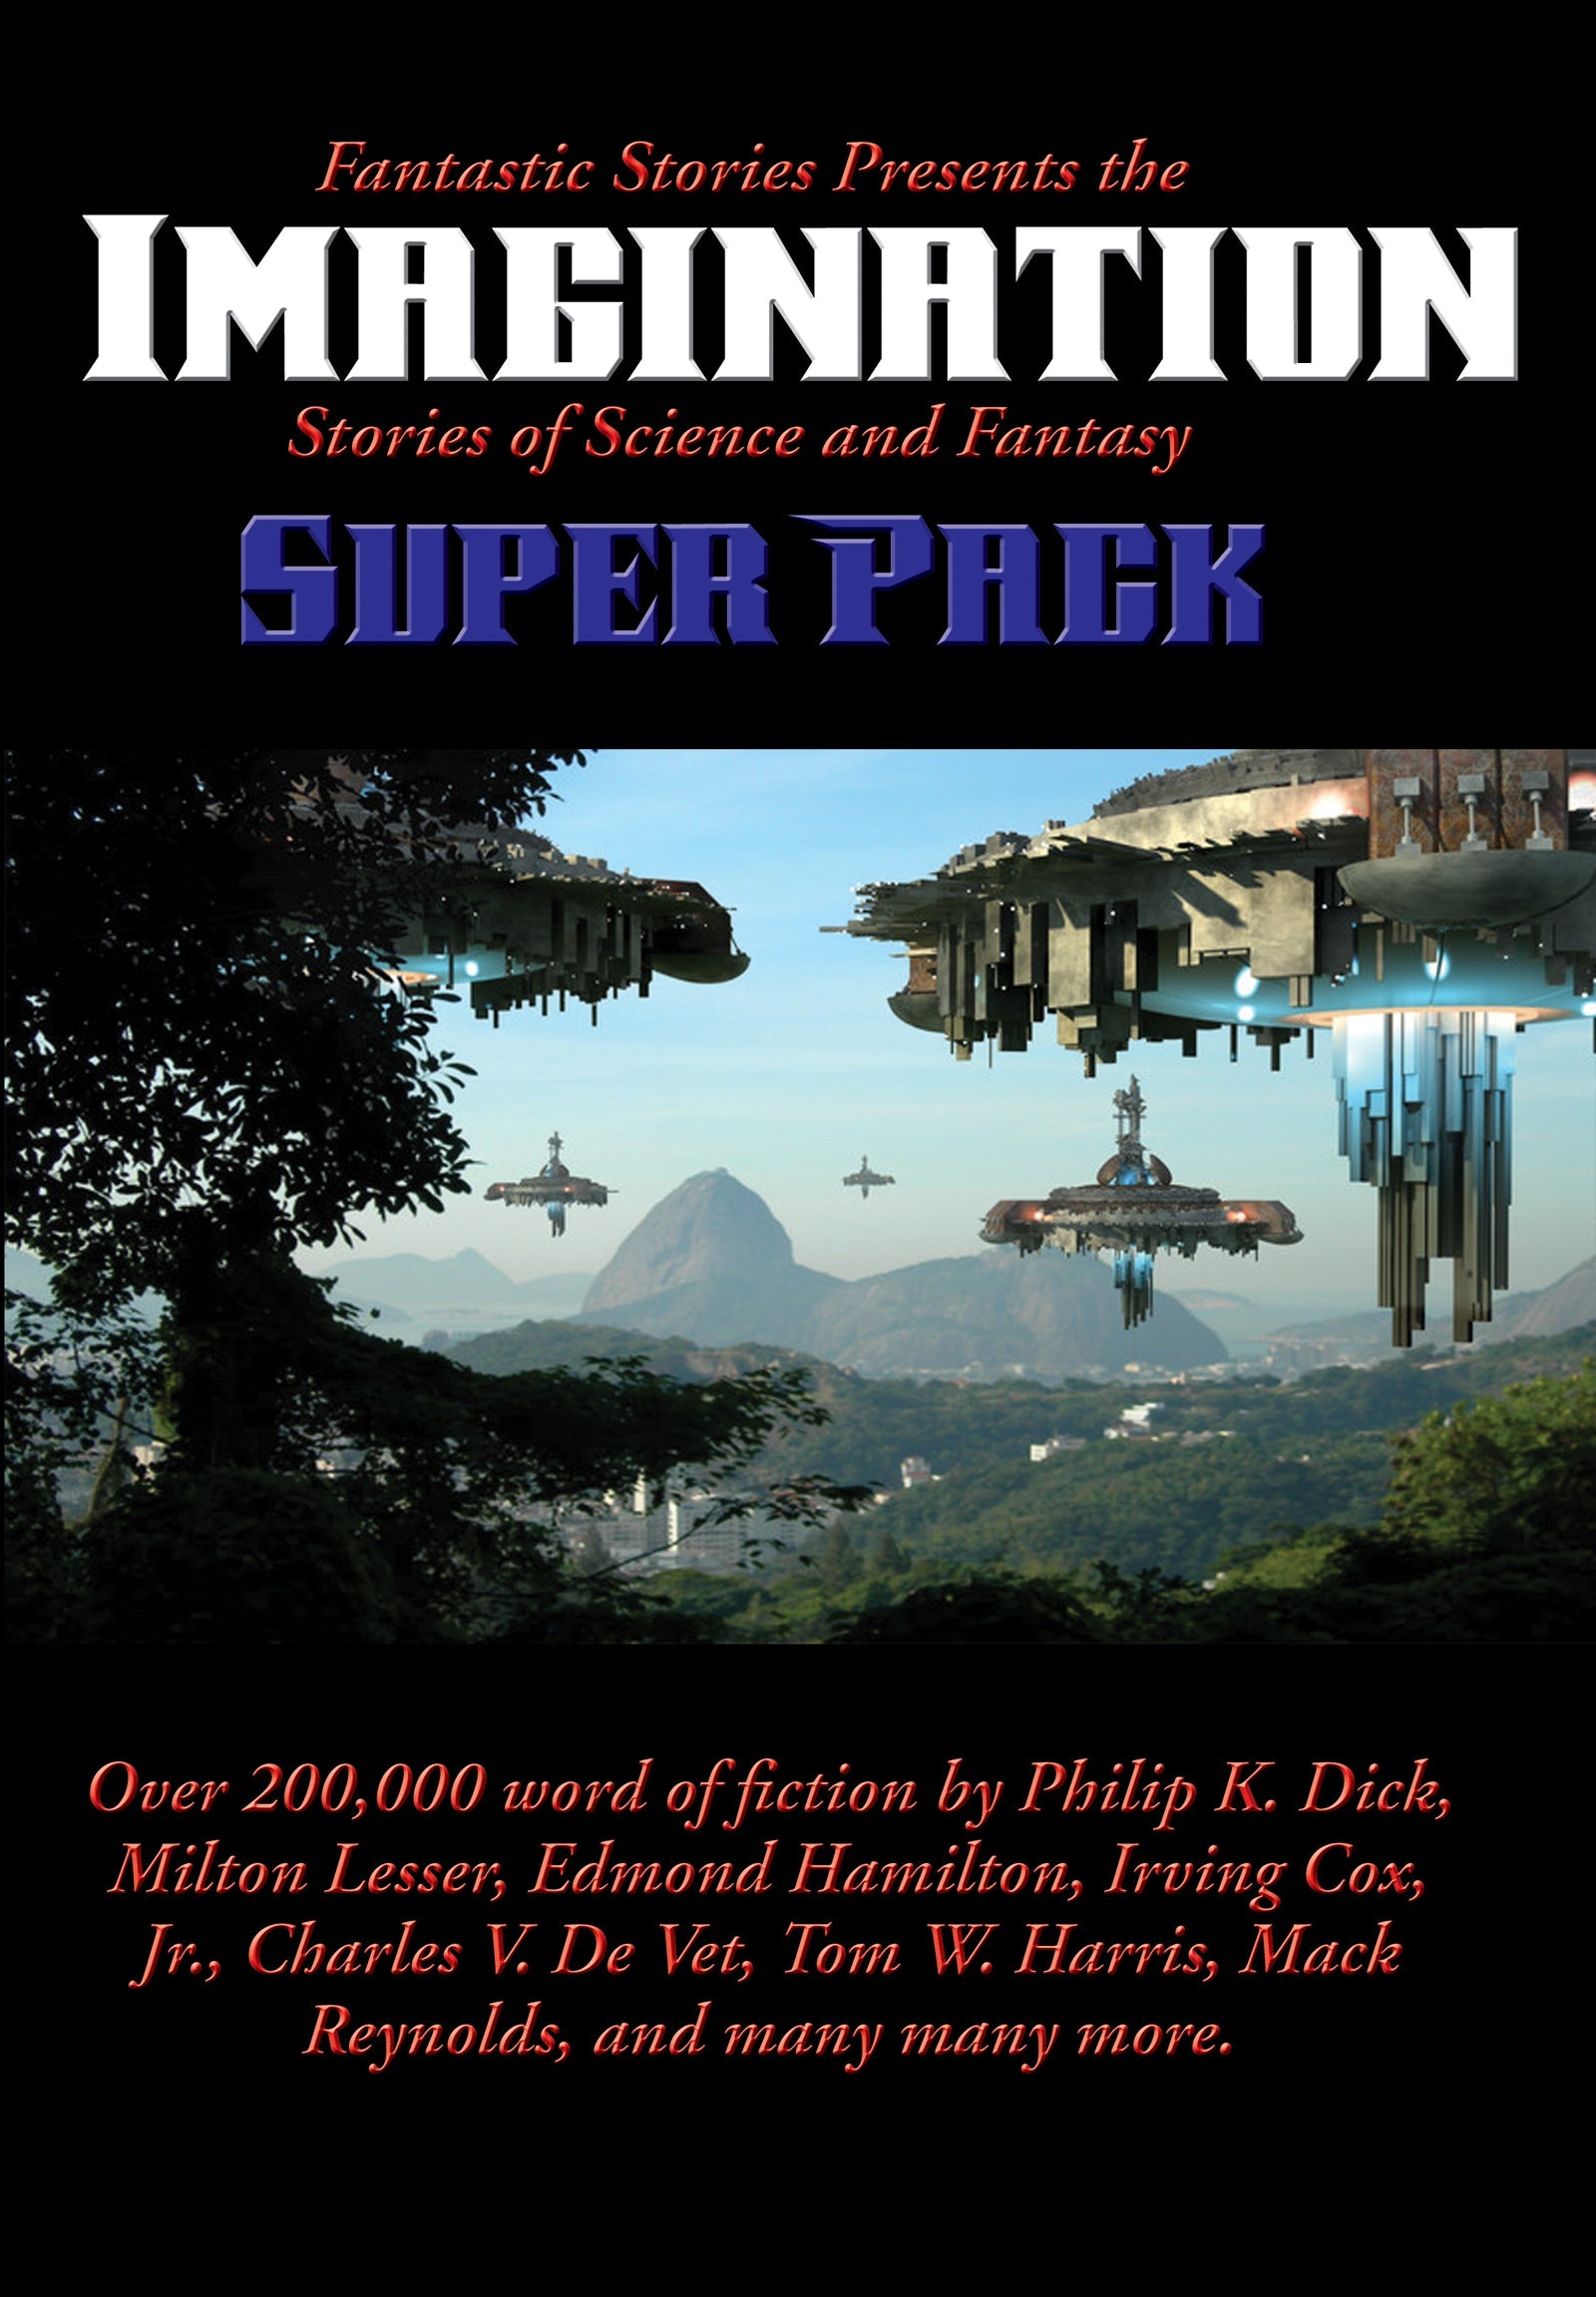 Cover art for Positronic Super Pack #27, the Imagination Super Pack.